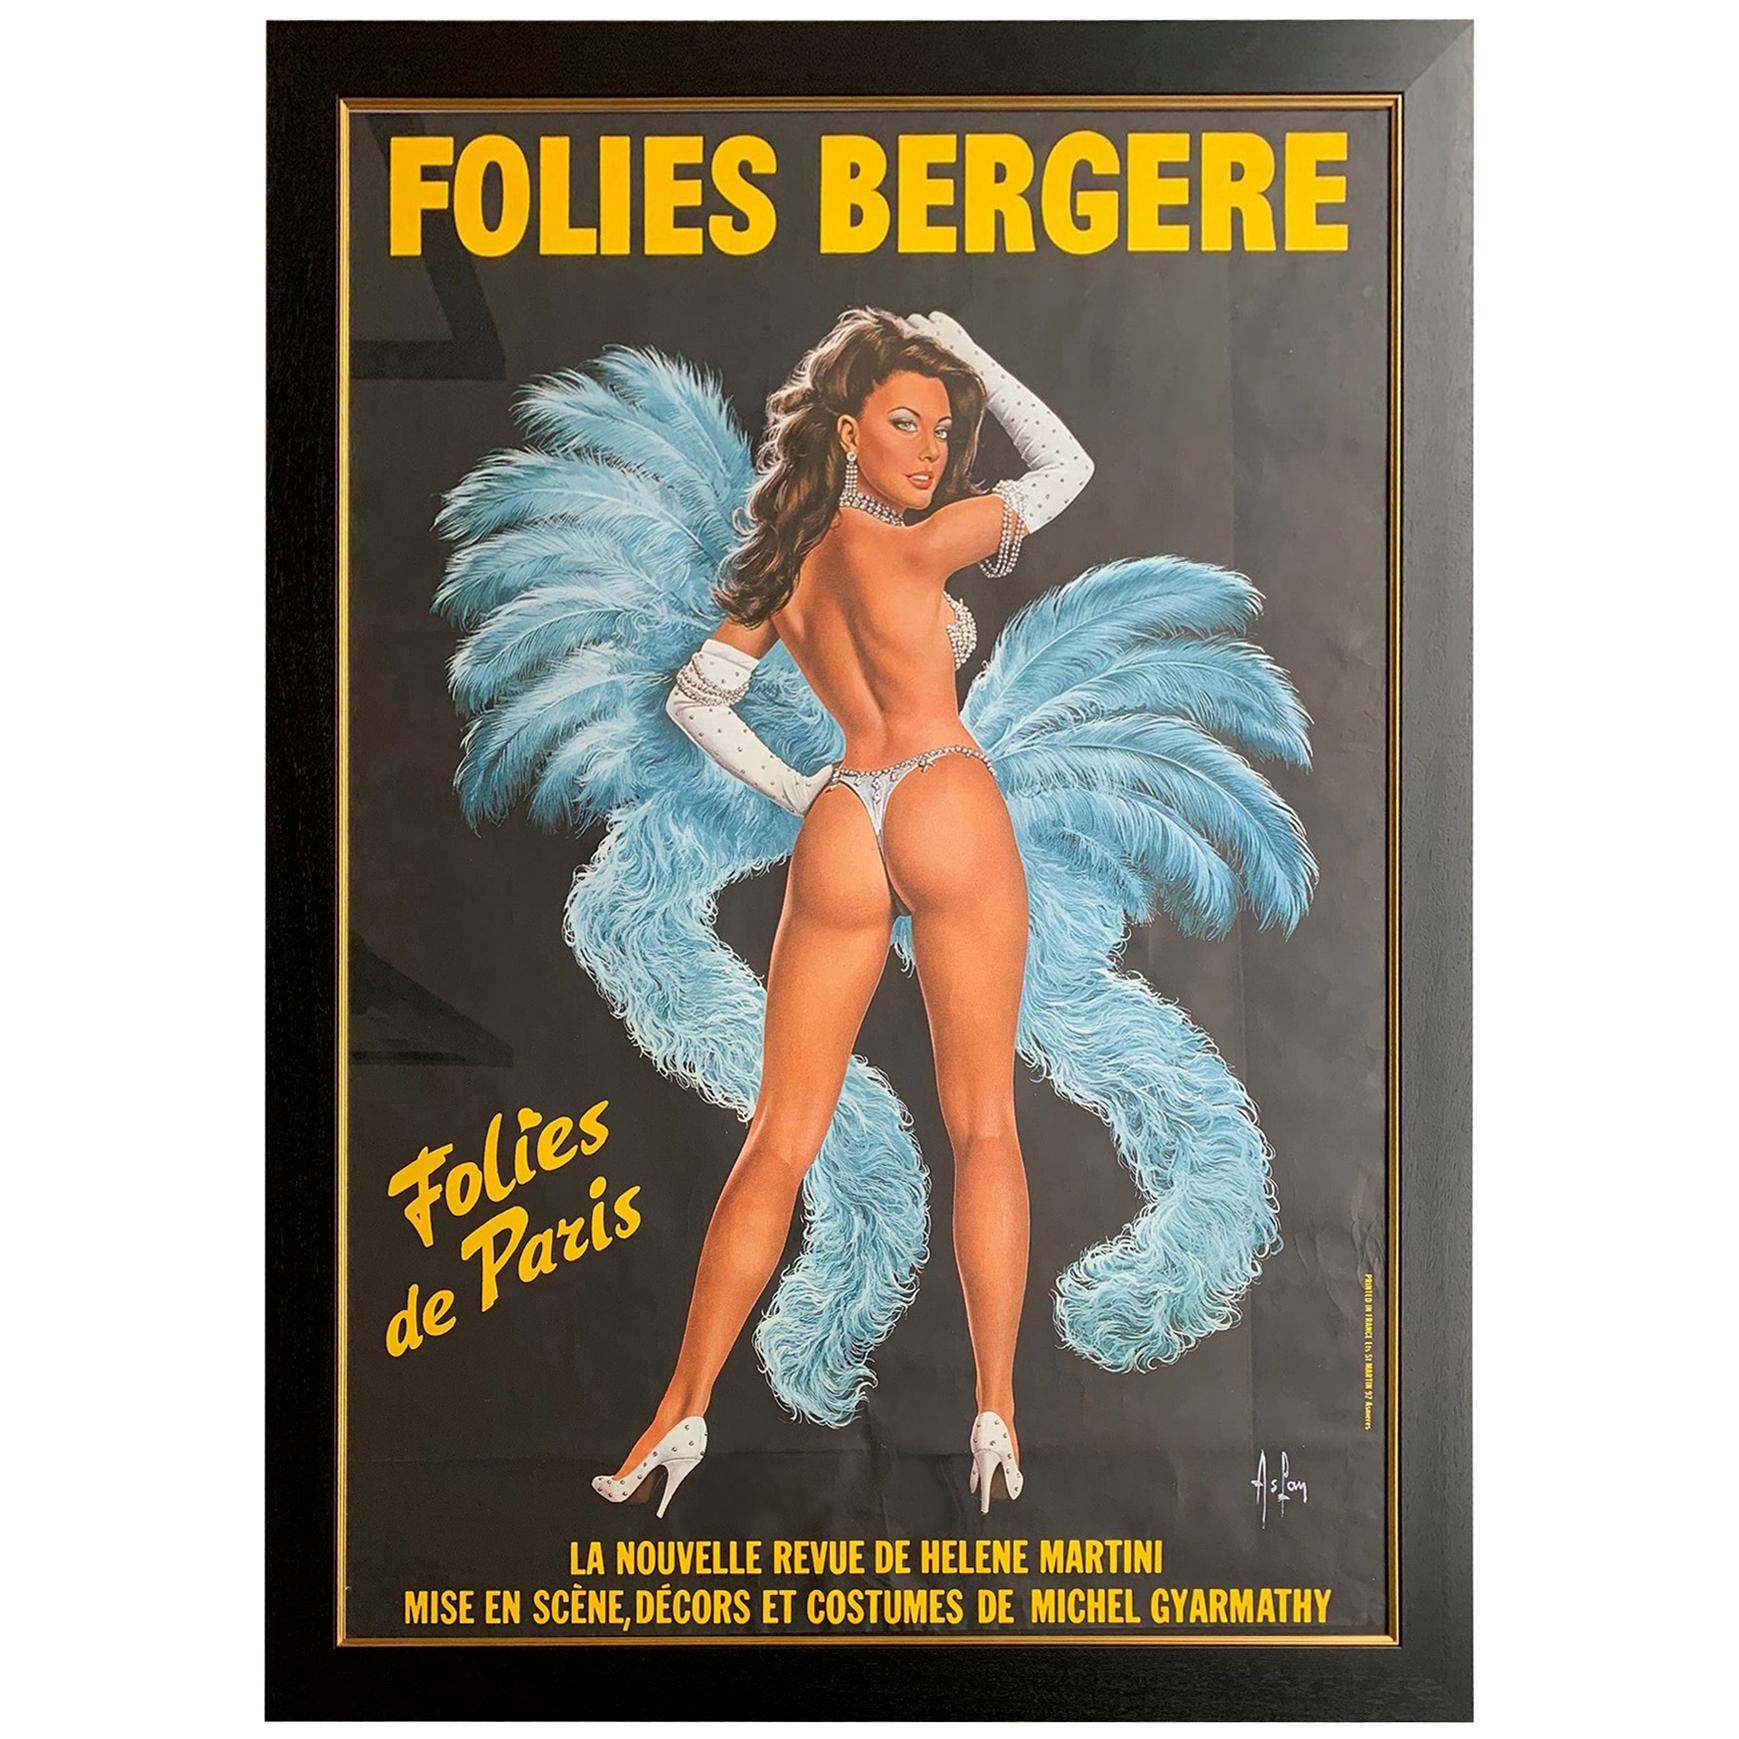 Fabulous Original 1960s Large Folies Bergere Poster by Artist Alain Gourdon